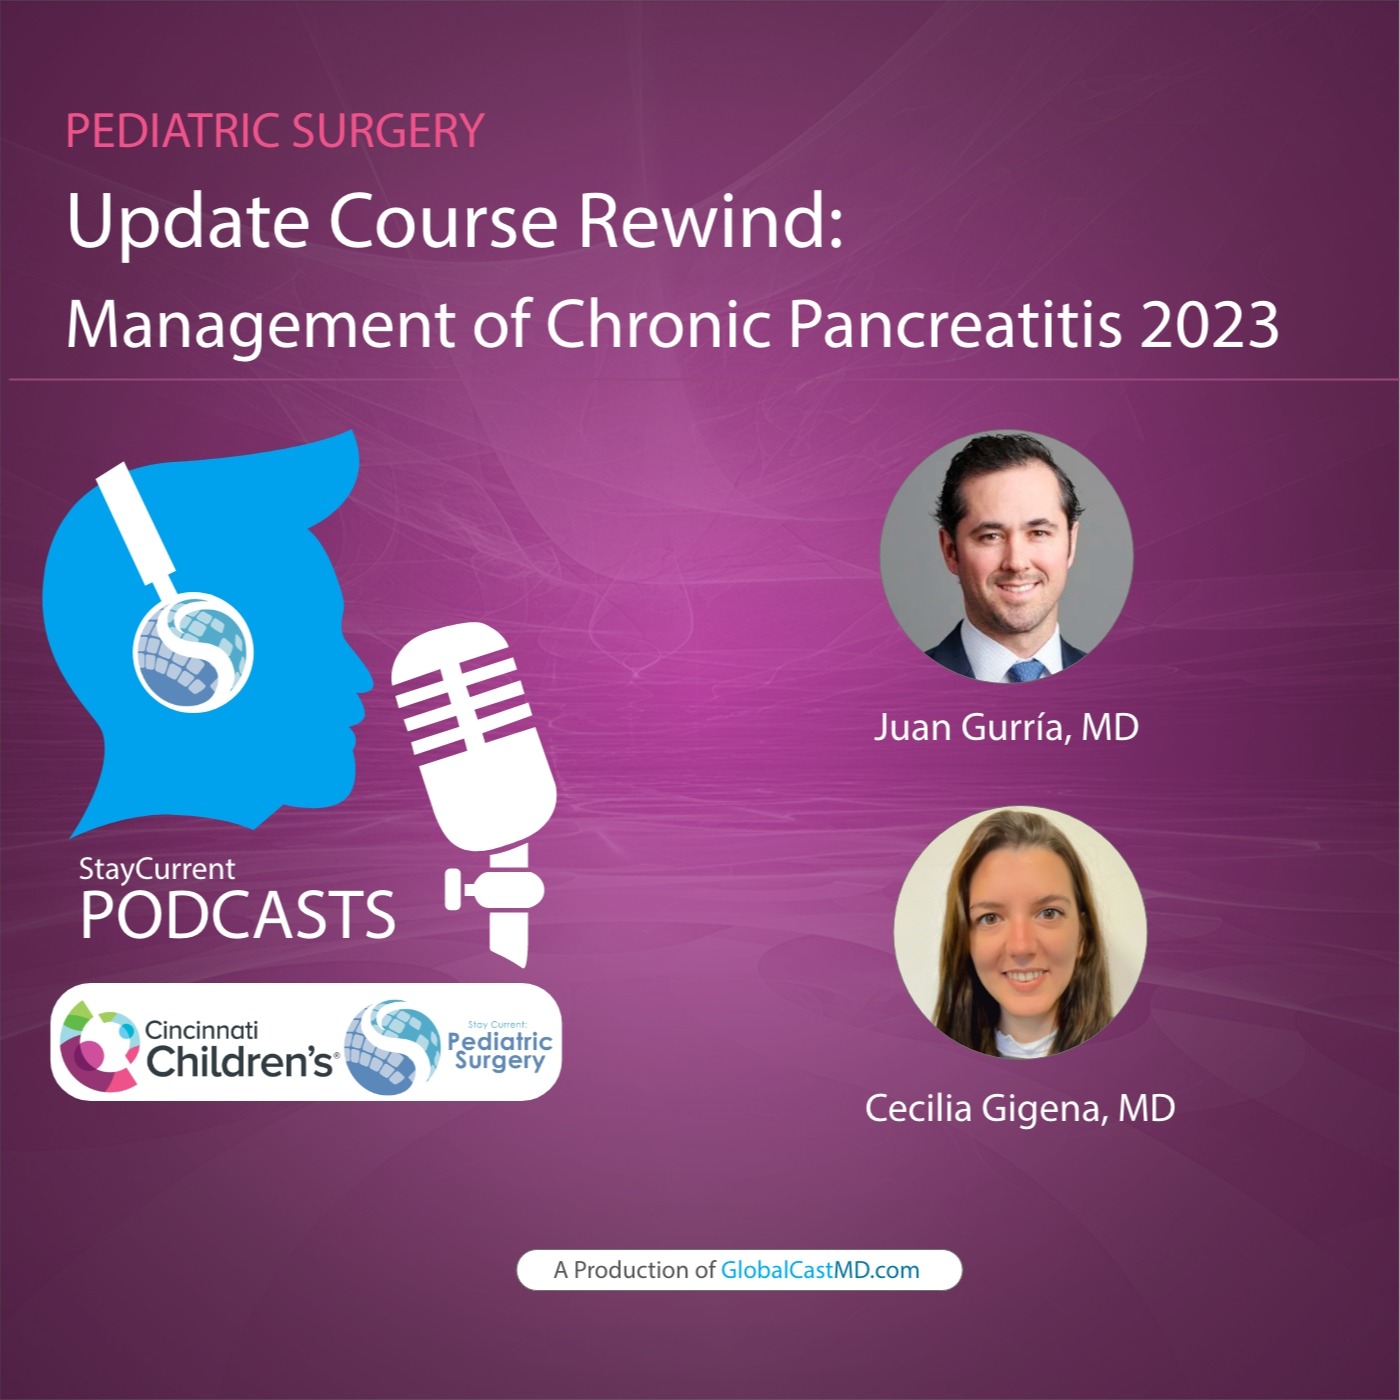 Update Course Rewind: Management of Chronic Pancreatitis 2023